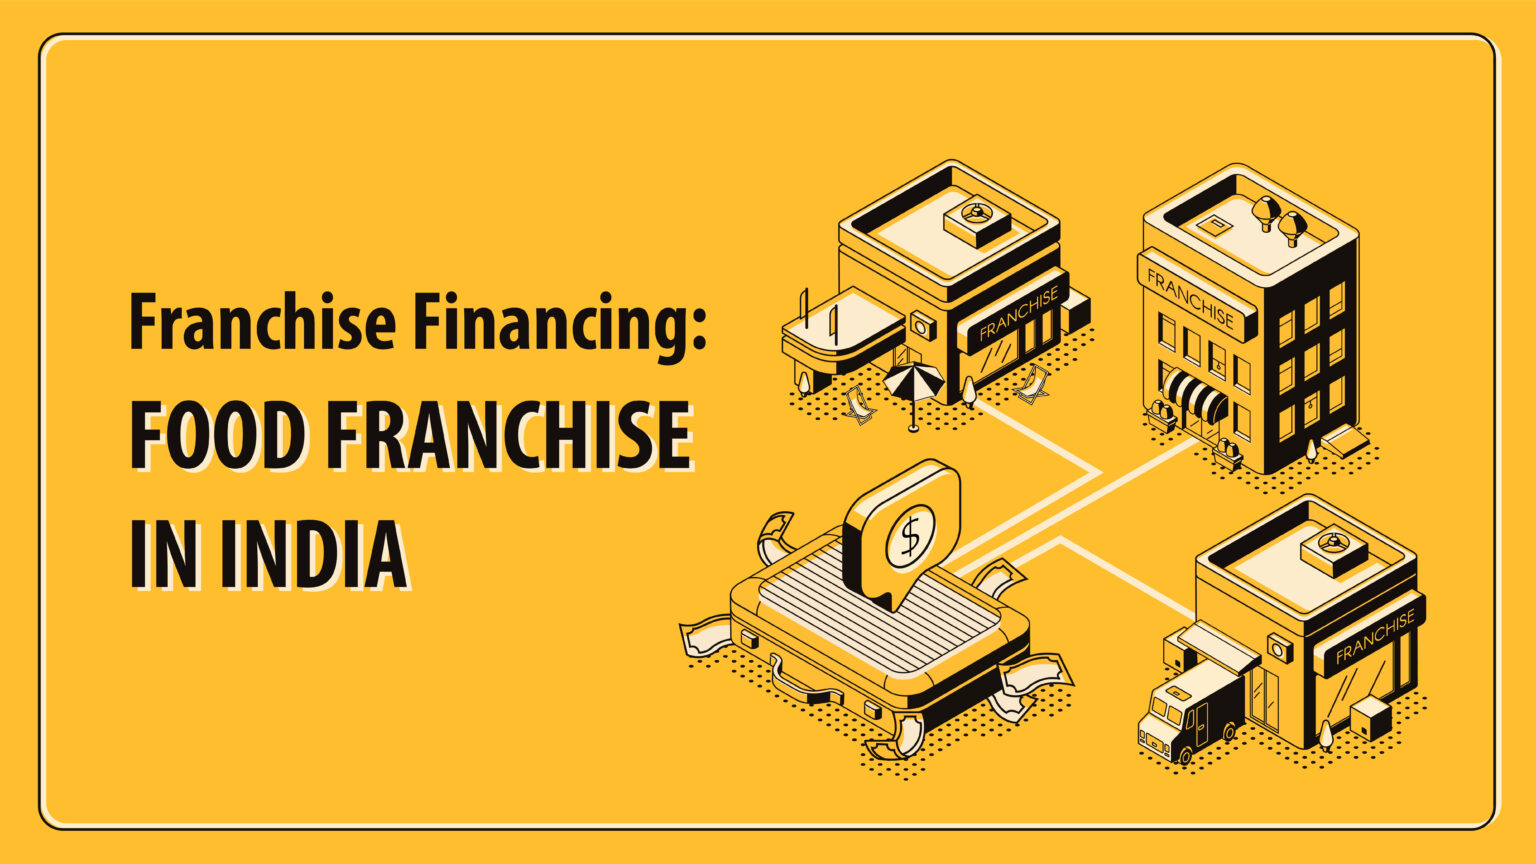 Franchise Financing: Food Franchise in India